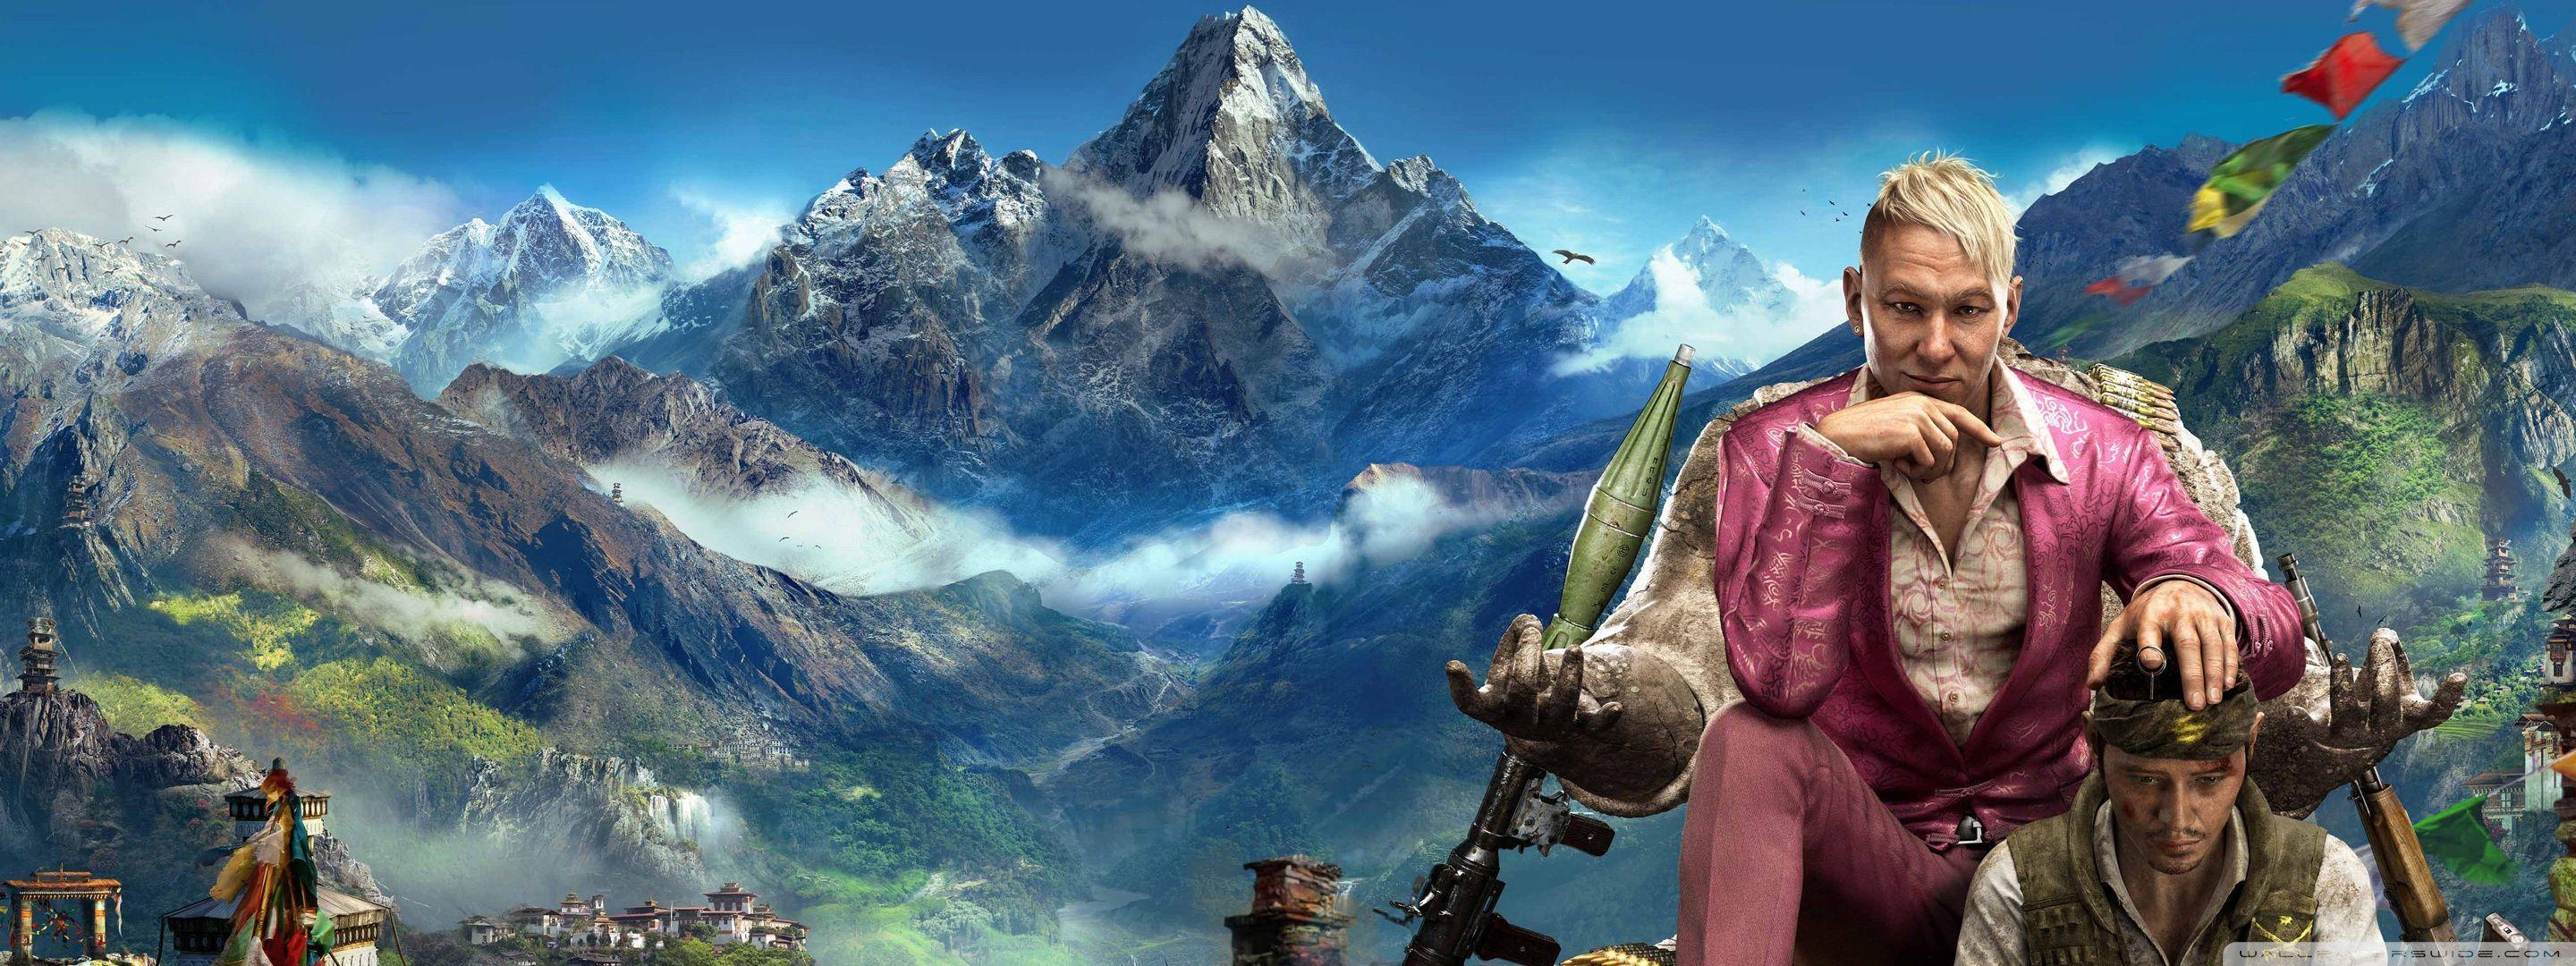 Far Cry 4 Himalaya HD desktop wallpapers : High Definition